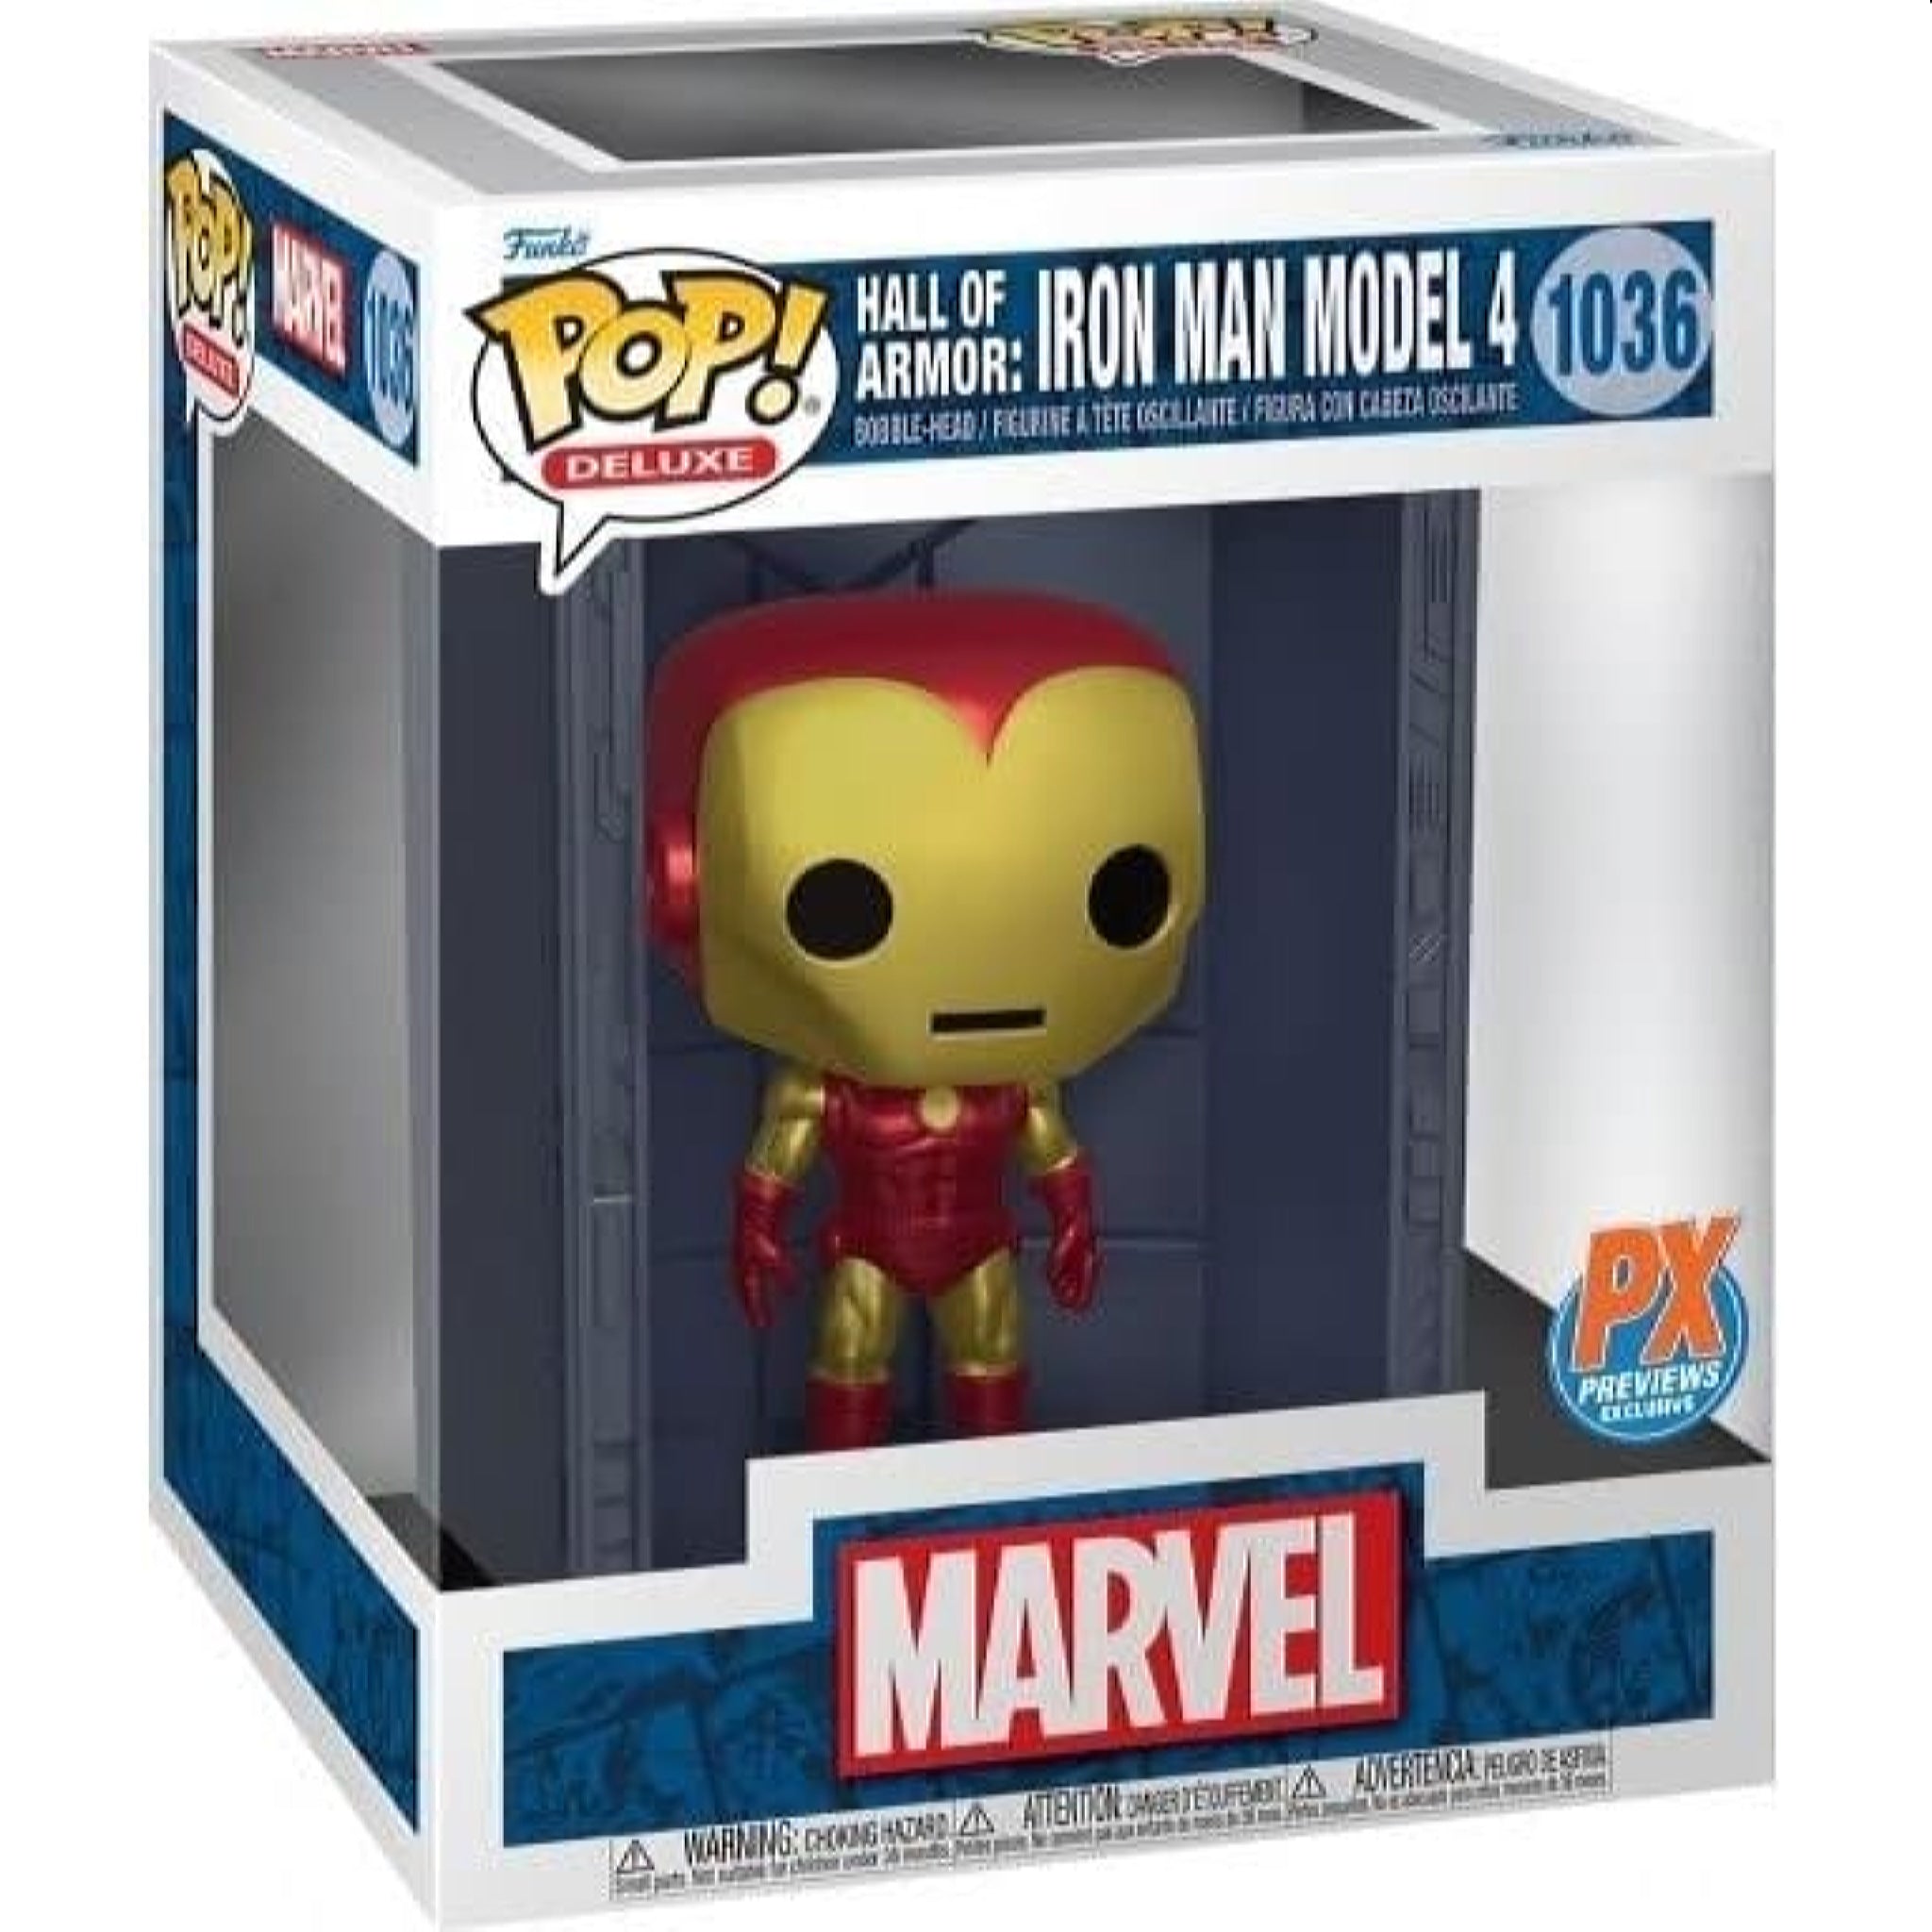 Marvel Hall Of Armor Iron Man Model 4 Metallic Funko Pop! Vinyl Figure DAMAGED BOX